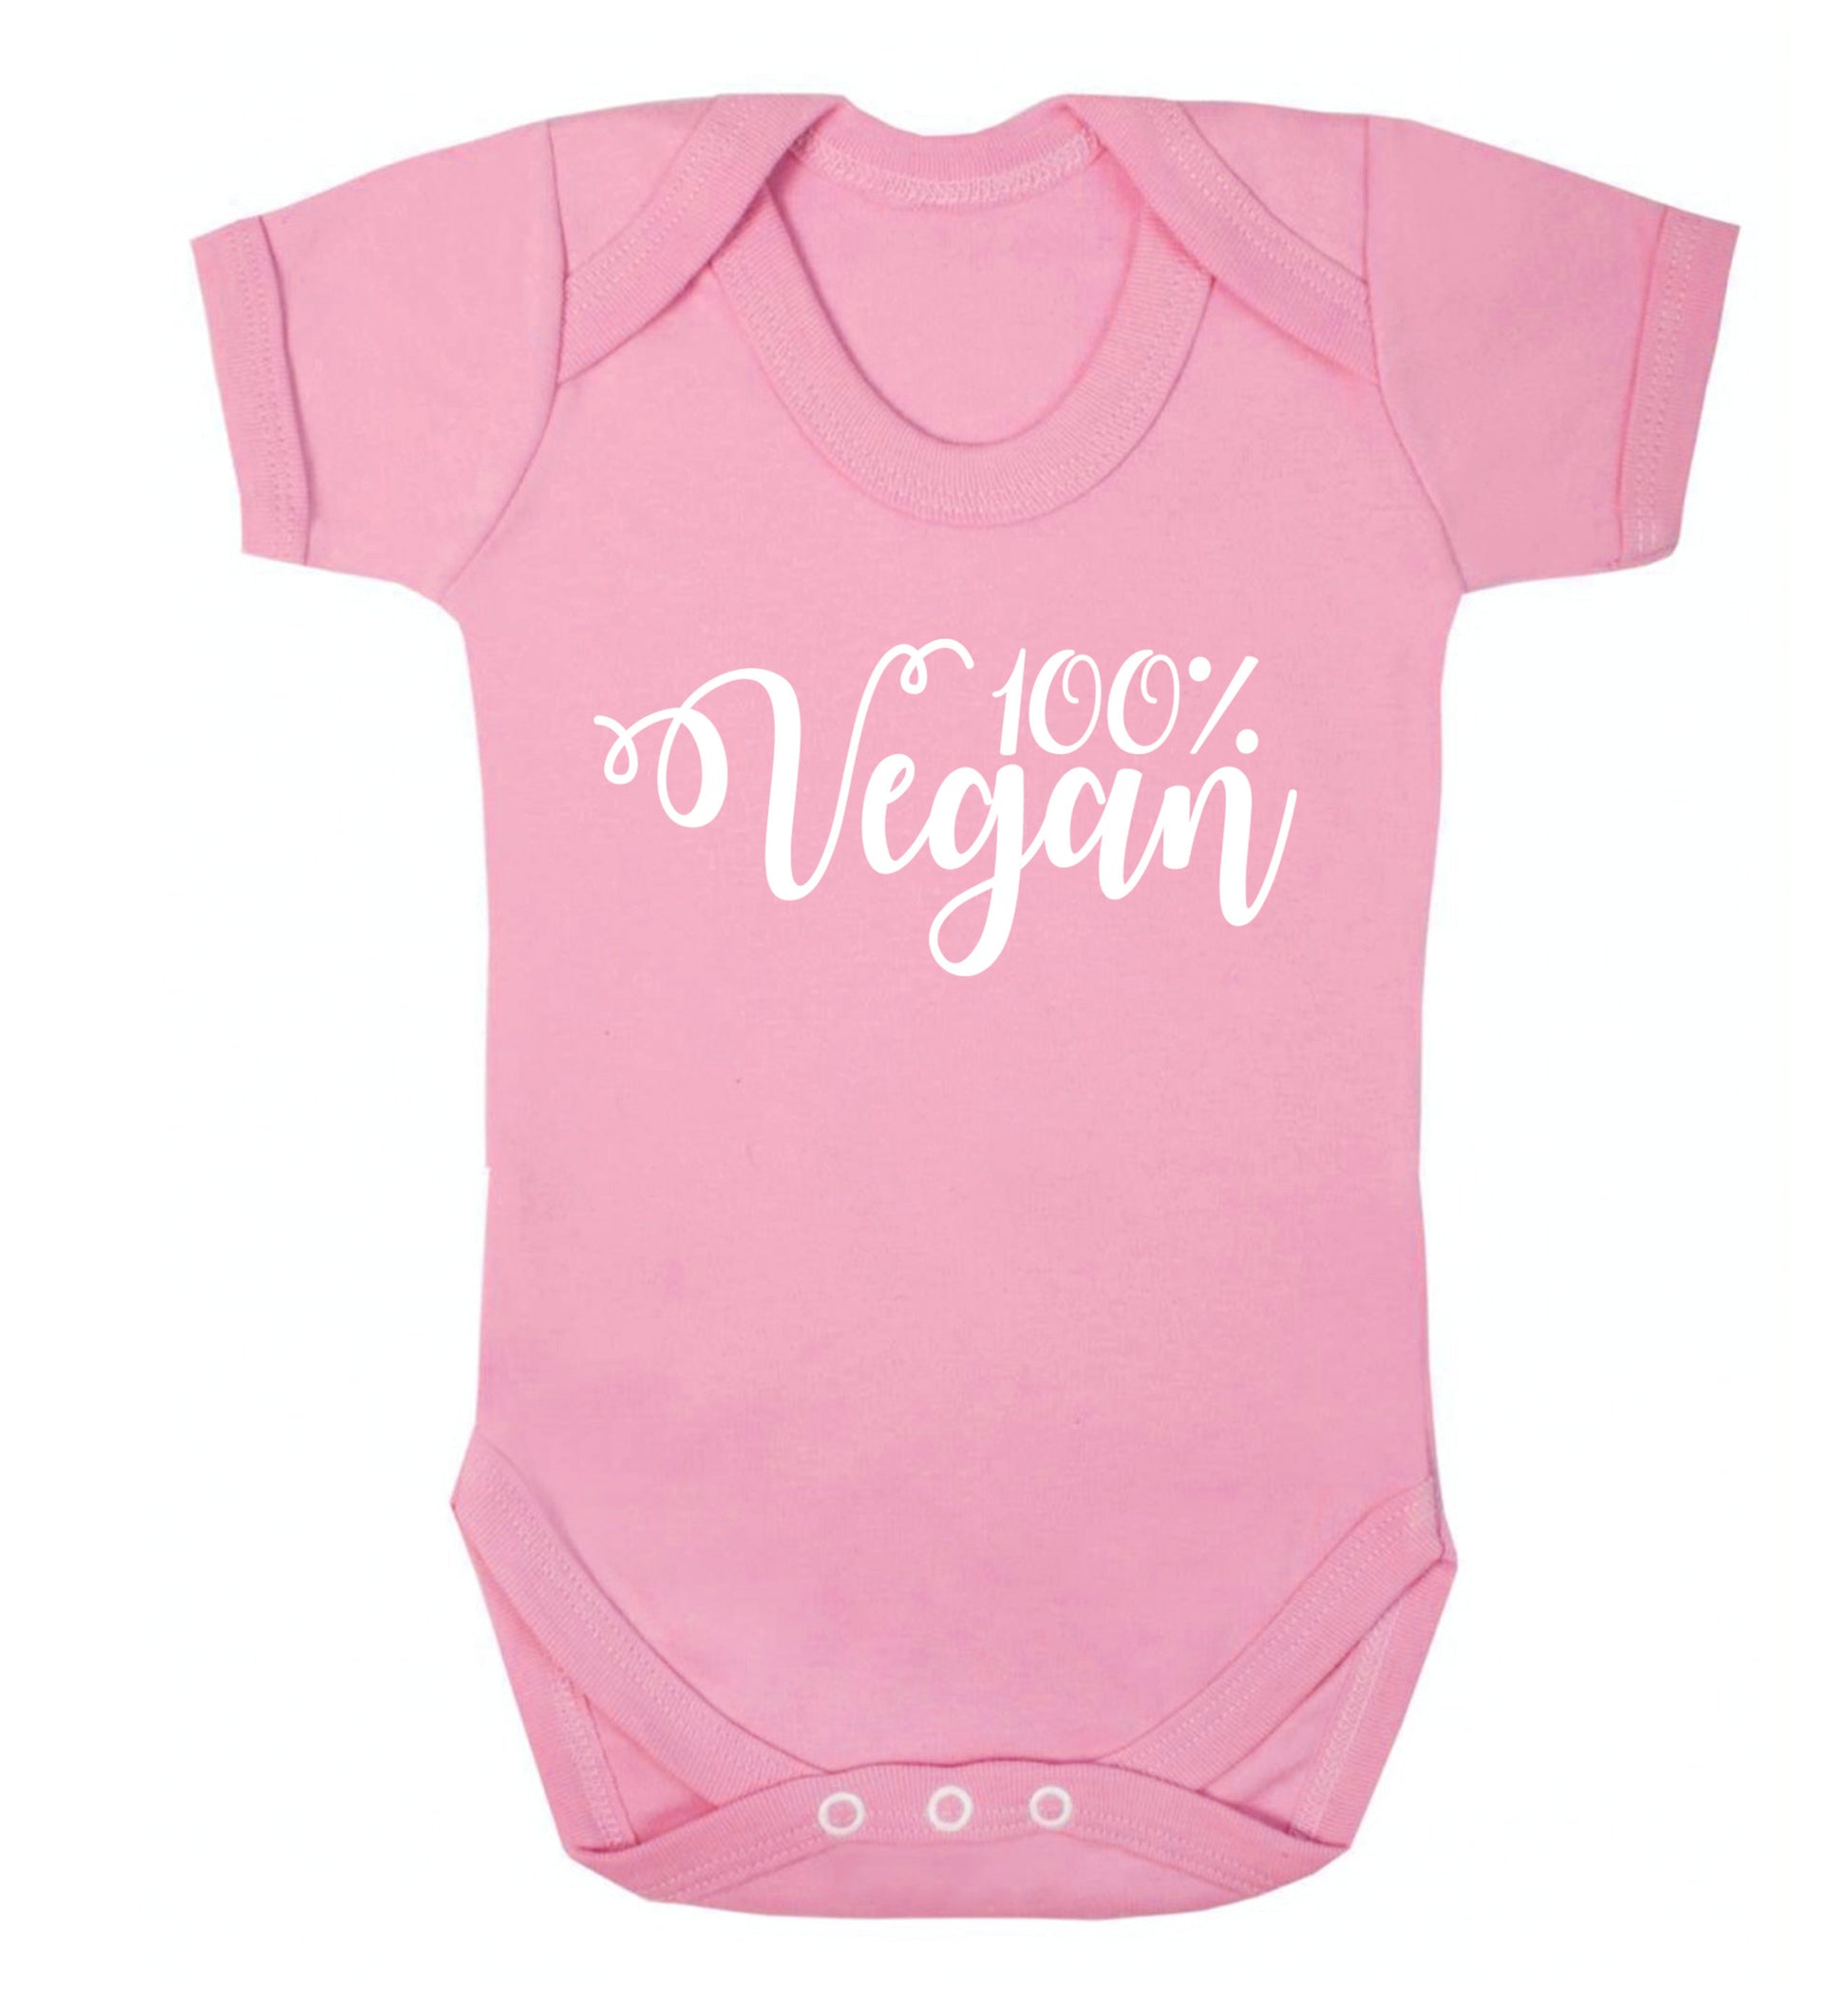 100% Vegan Baby Vest pale pink 18-24 months